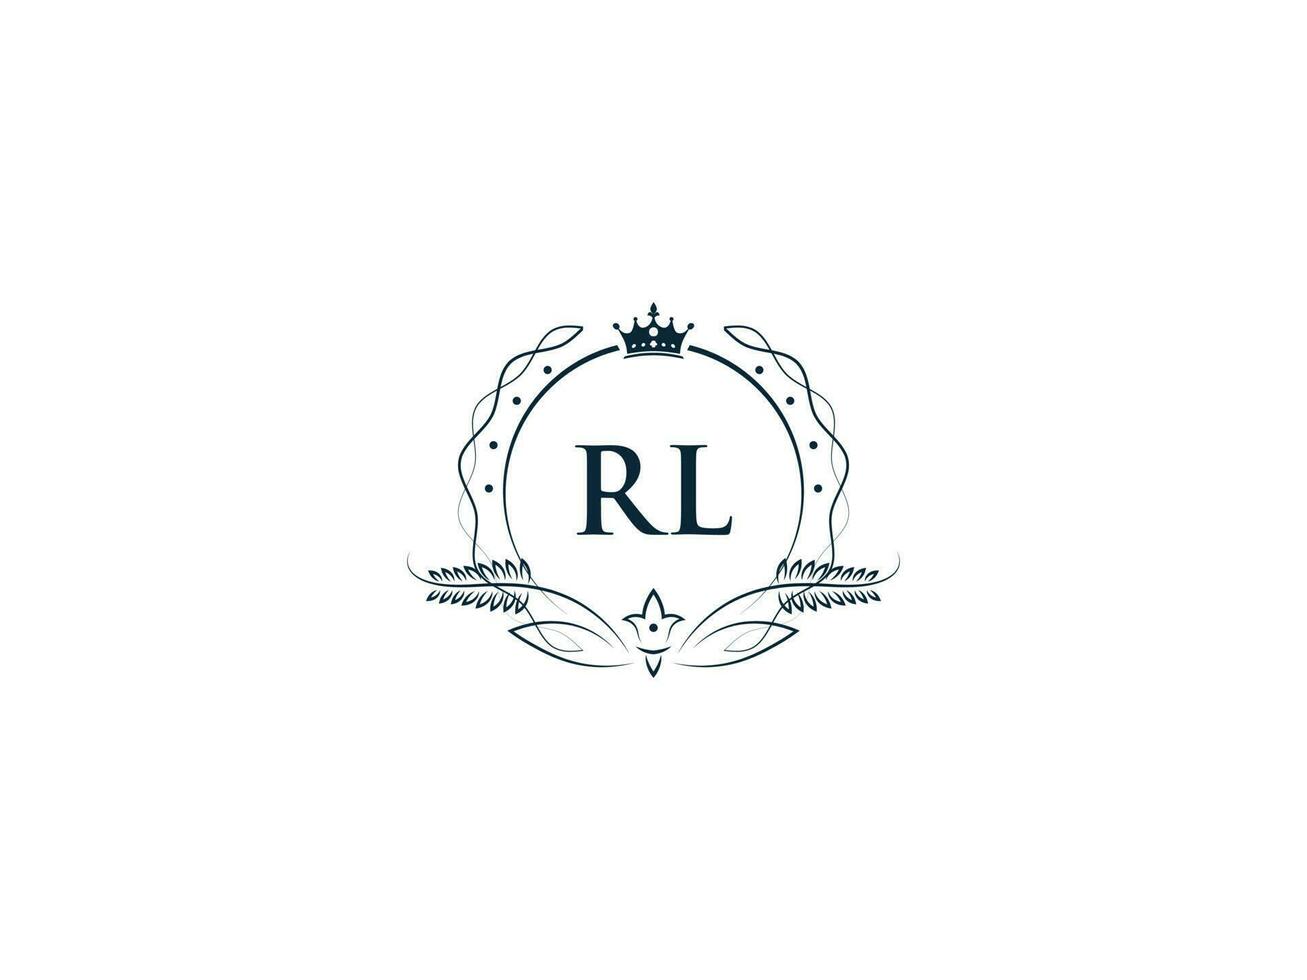 Royal couronne rl logo icône, féminin luxe rl g / D logo lettre vecteur